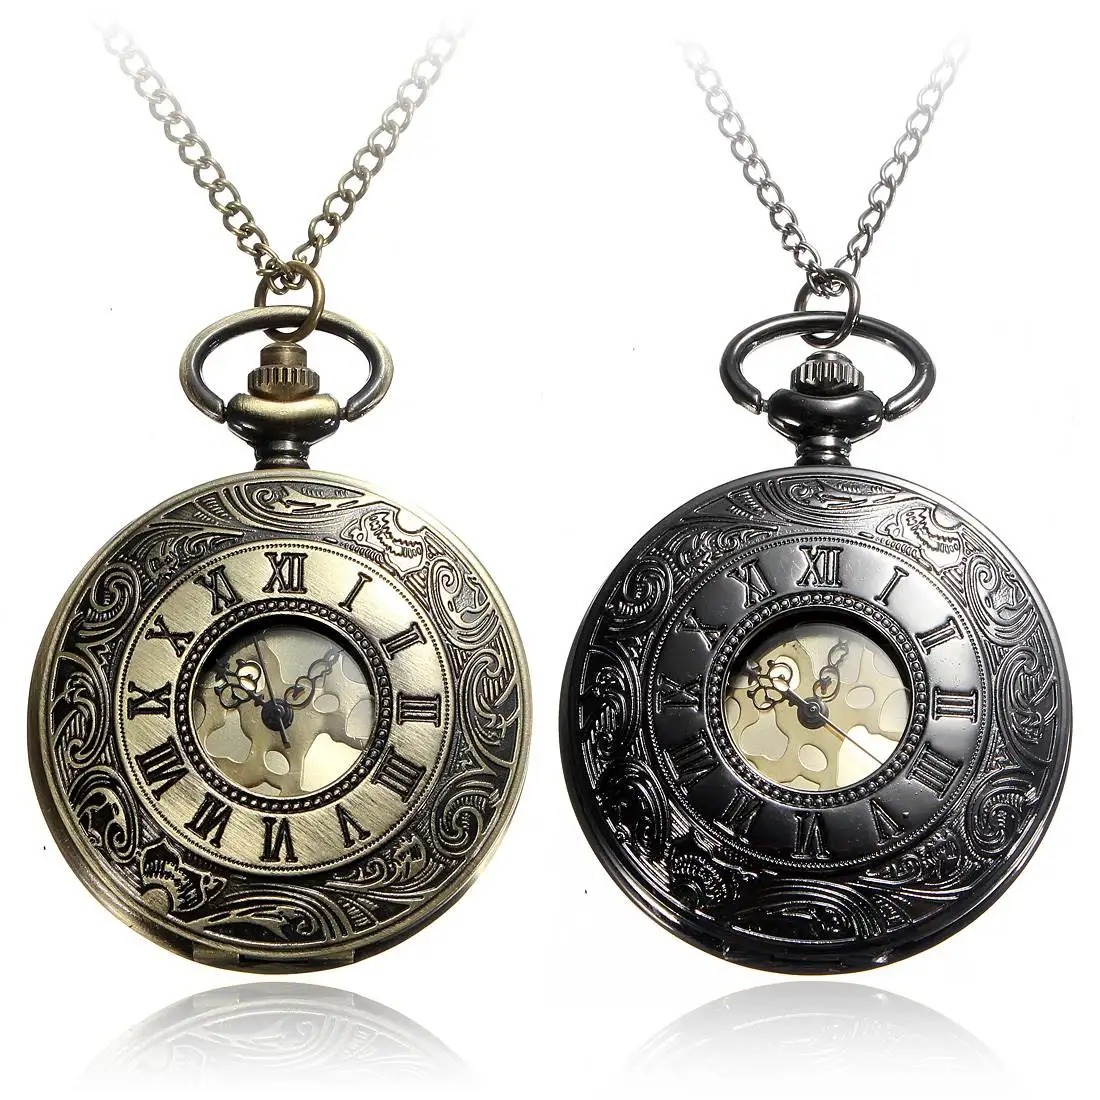 

New Antique Bronze Roma Number PocketWatch Vintage Alloy Steampunk Bronze Necklace Pendant Chain Clock Watch Gift Quartz Watch